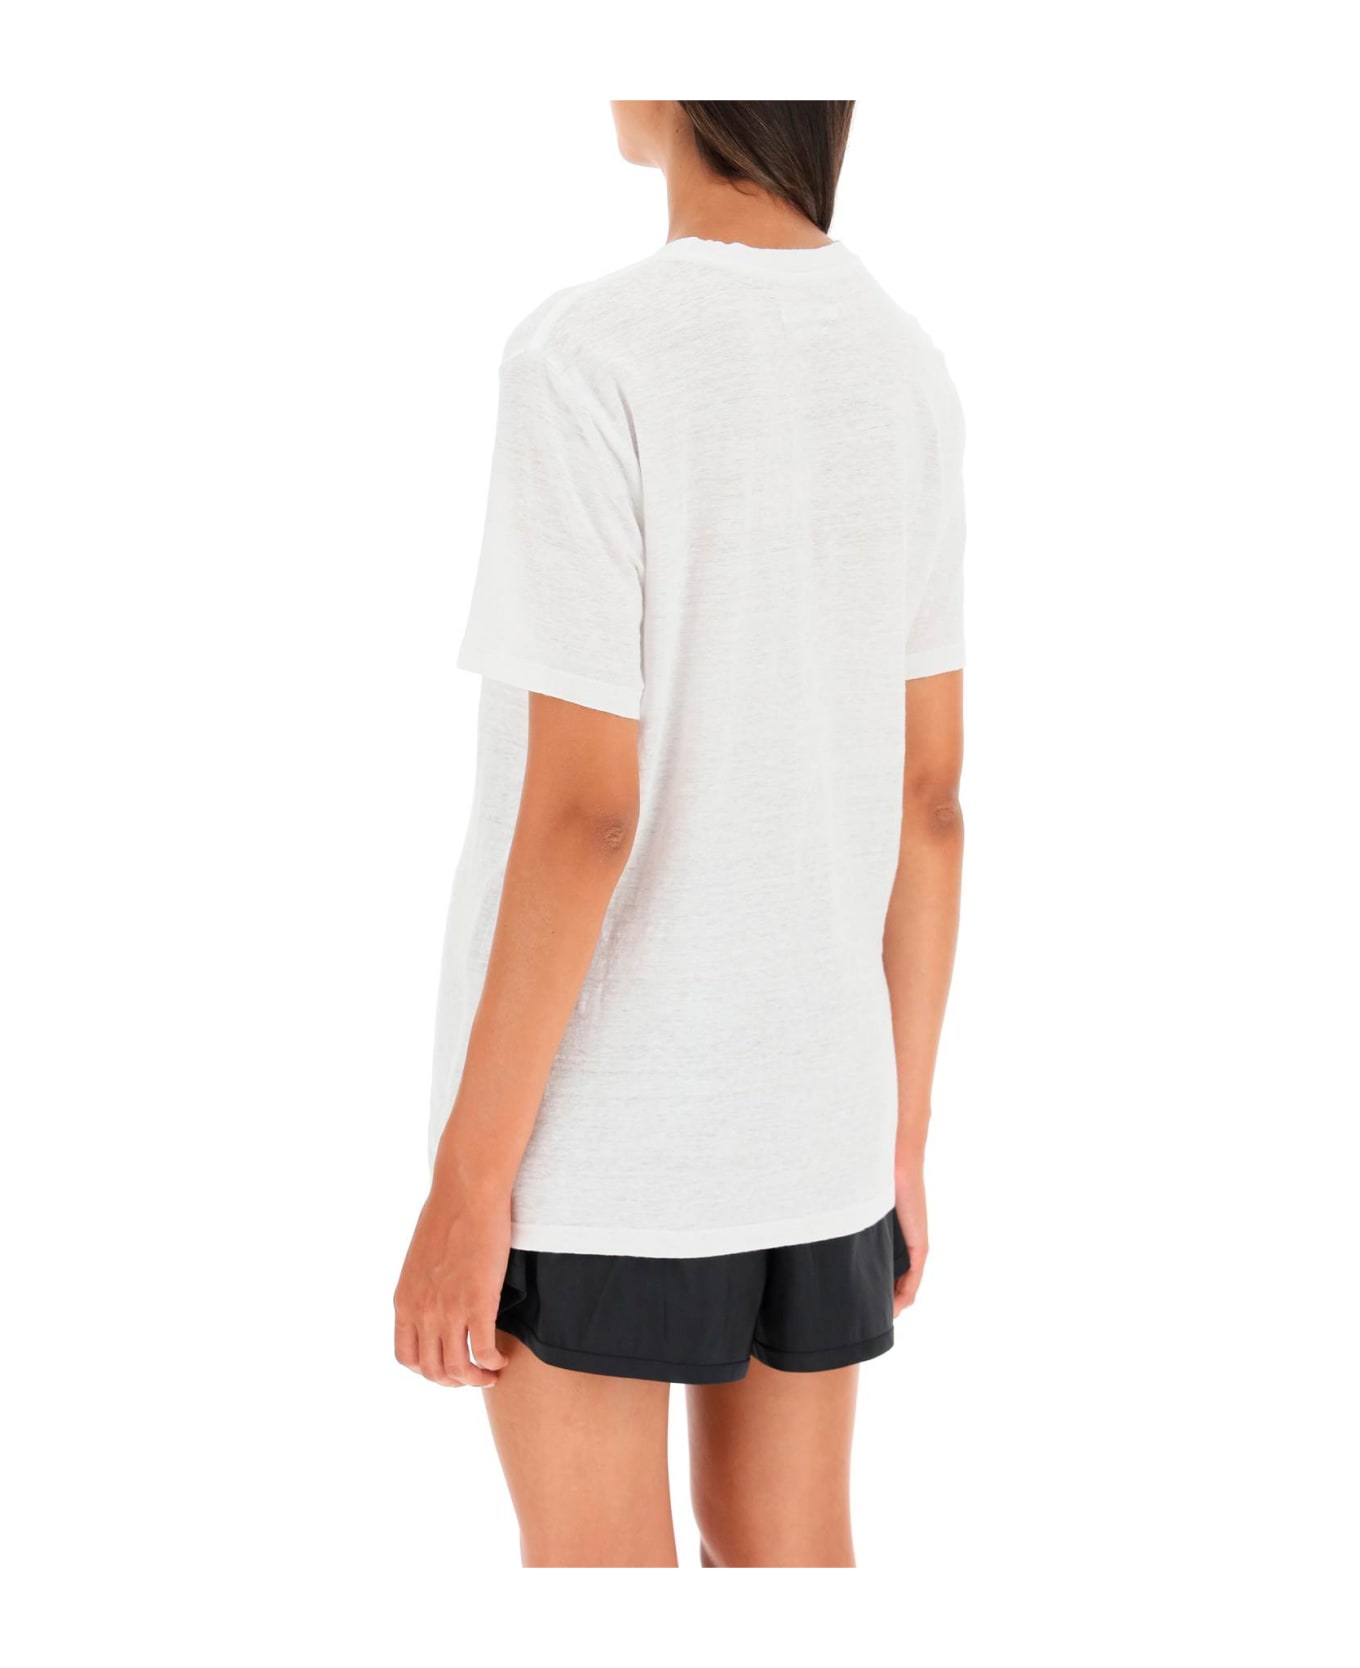 Marant Étoile Logo-printed Crewneck T-shirt - White Tシャツ